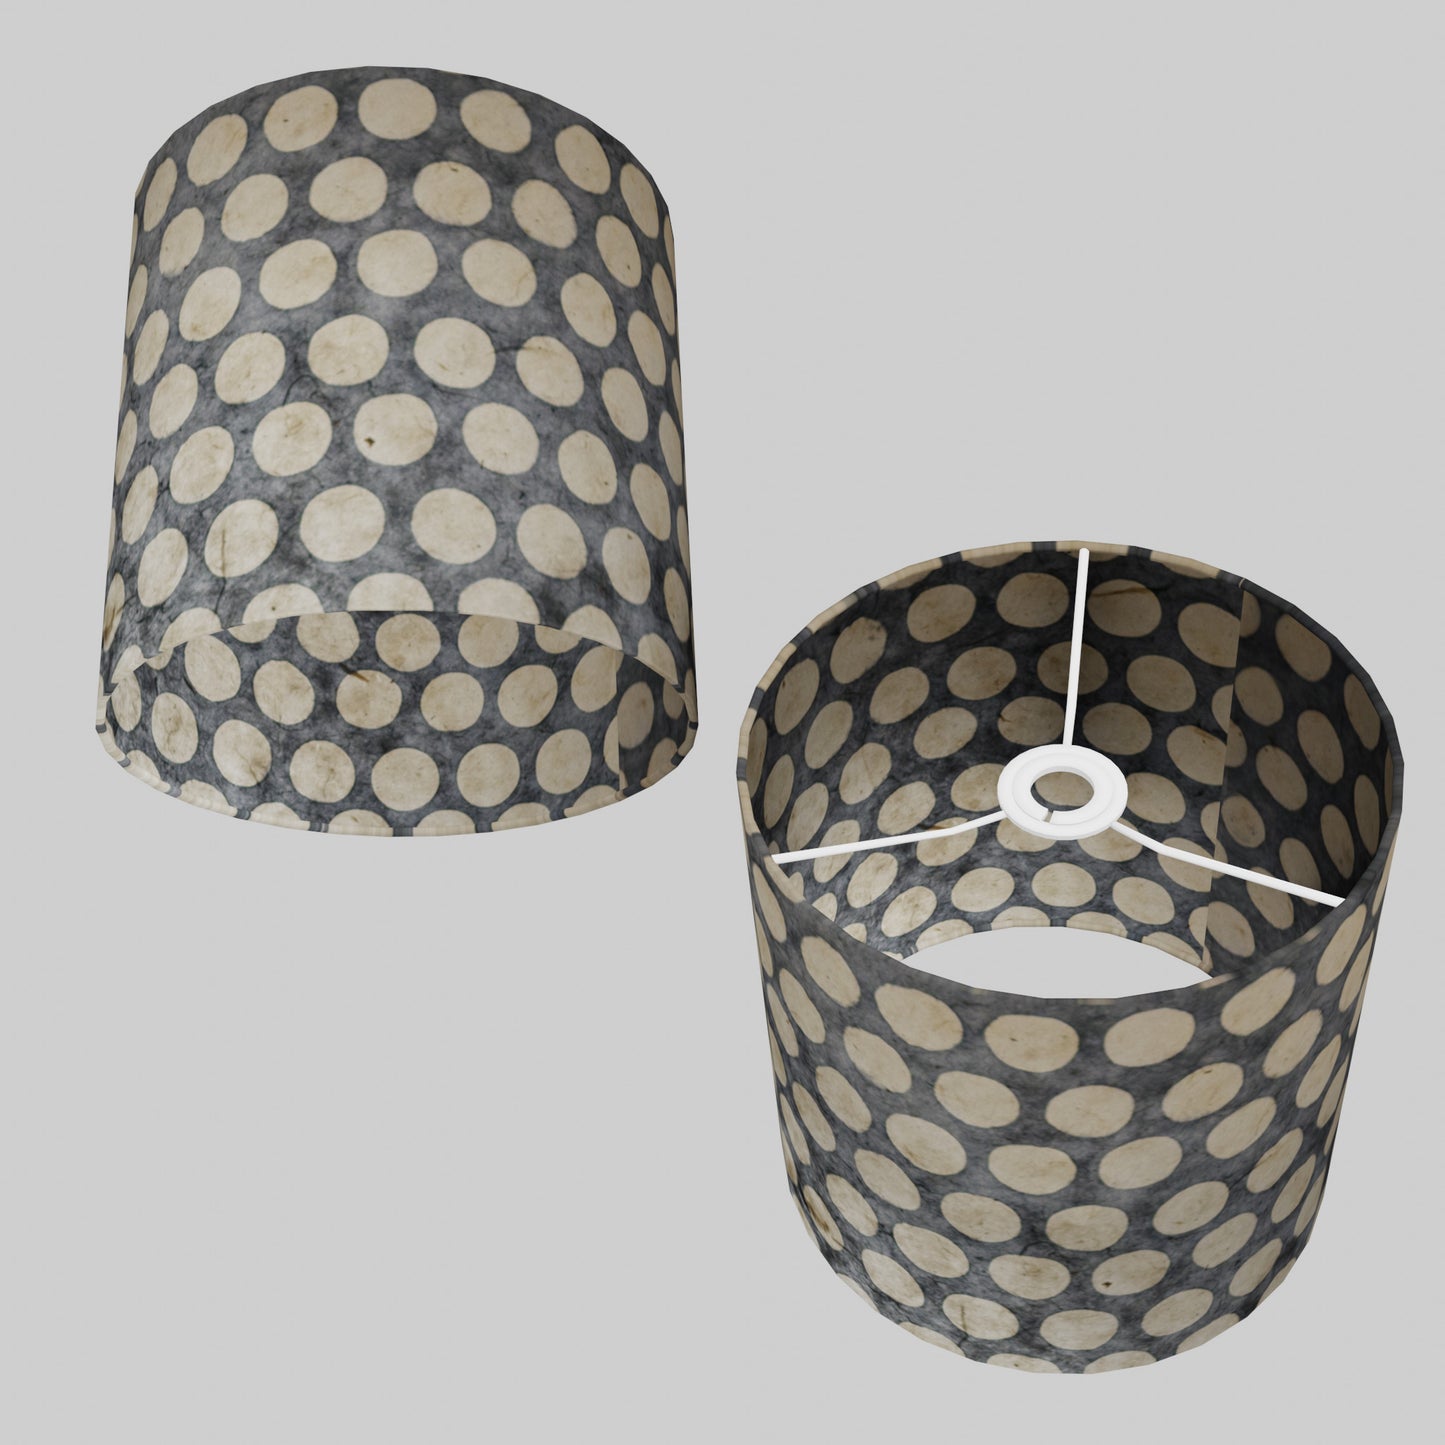 Drum Lamp Shade - P78 - Batik Dots on Grey, 25cm x 25cm